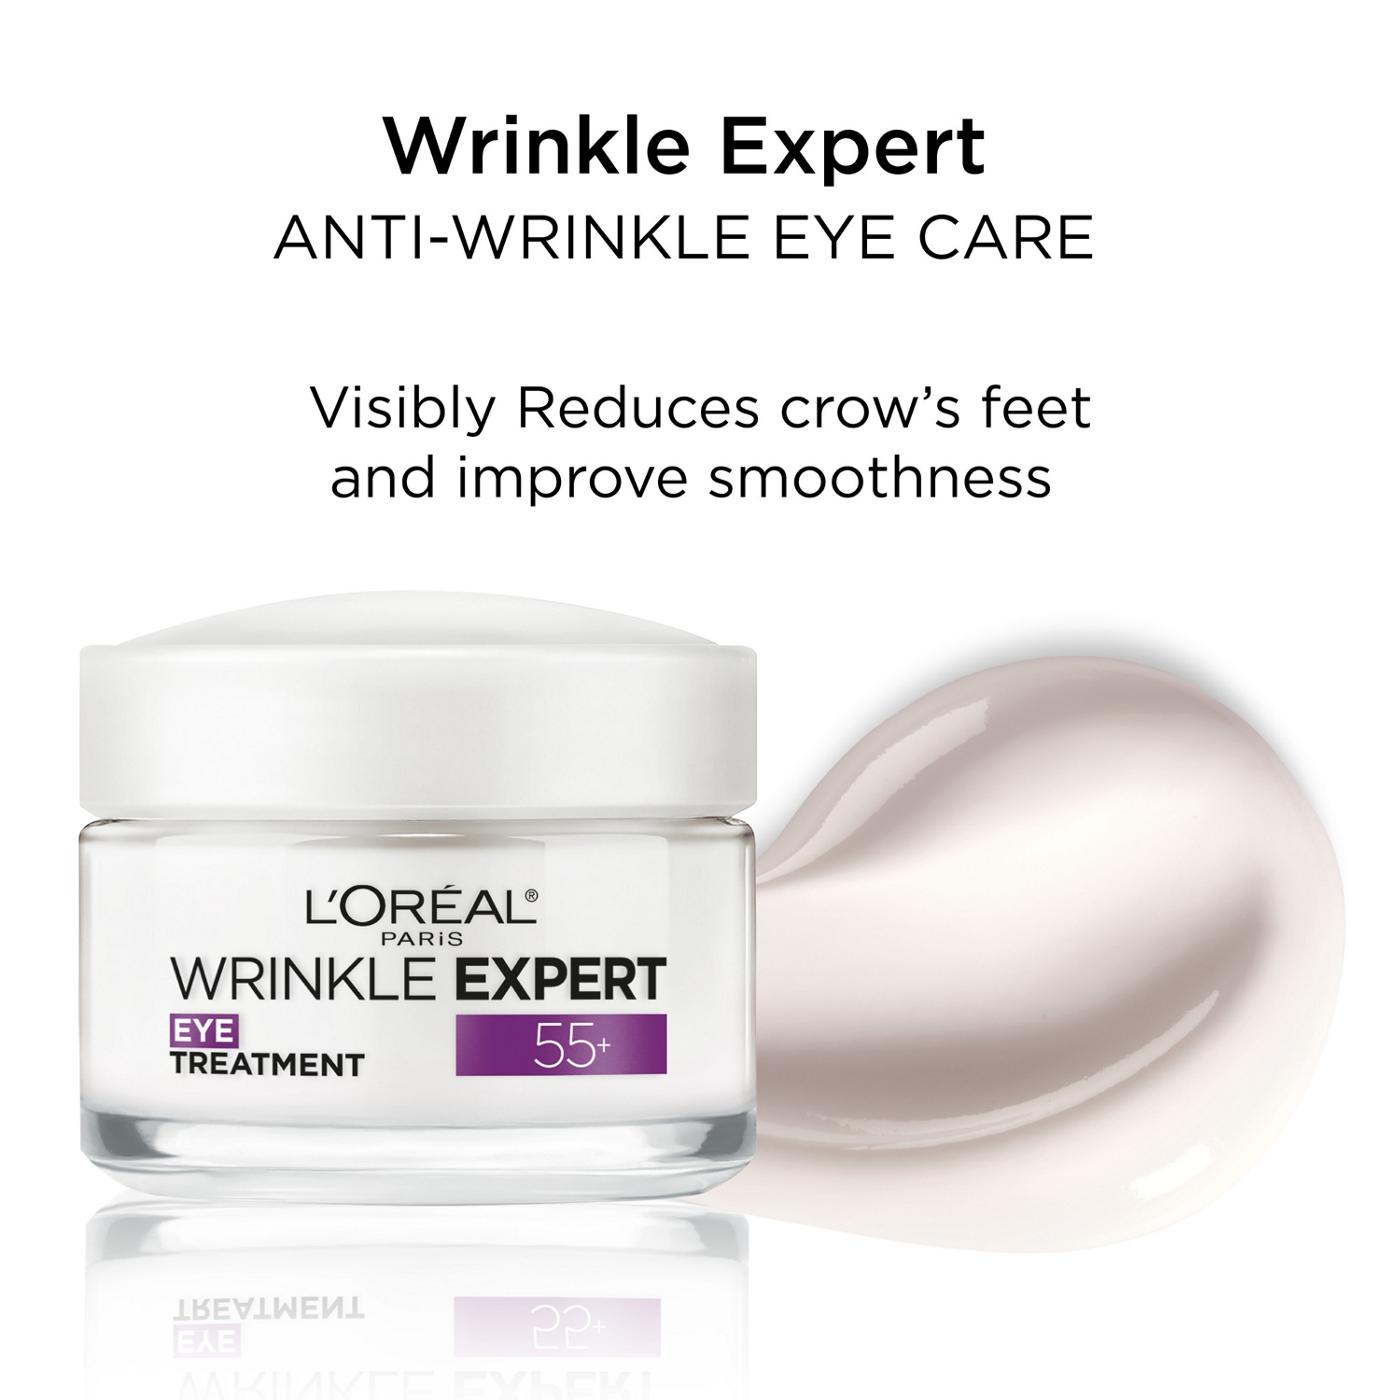 L'Oréal Paris Wrinkle Expert 55+ Anti-Wrinkle Eye Treatment; image 4 of 6